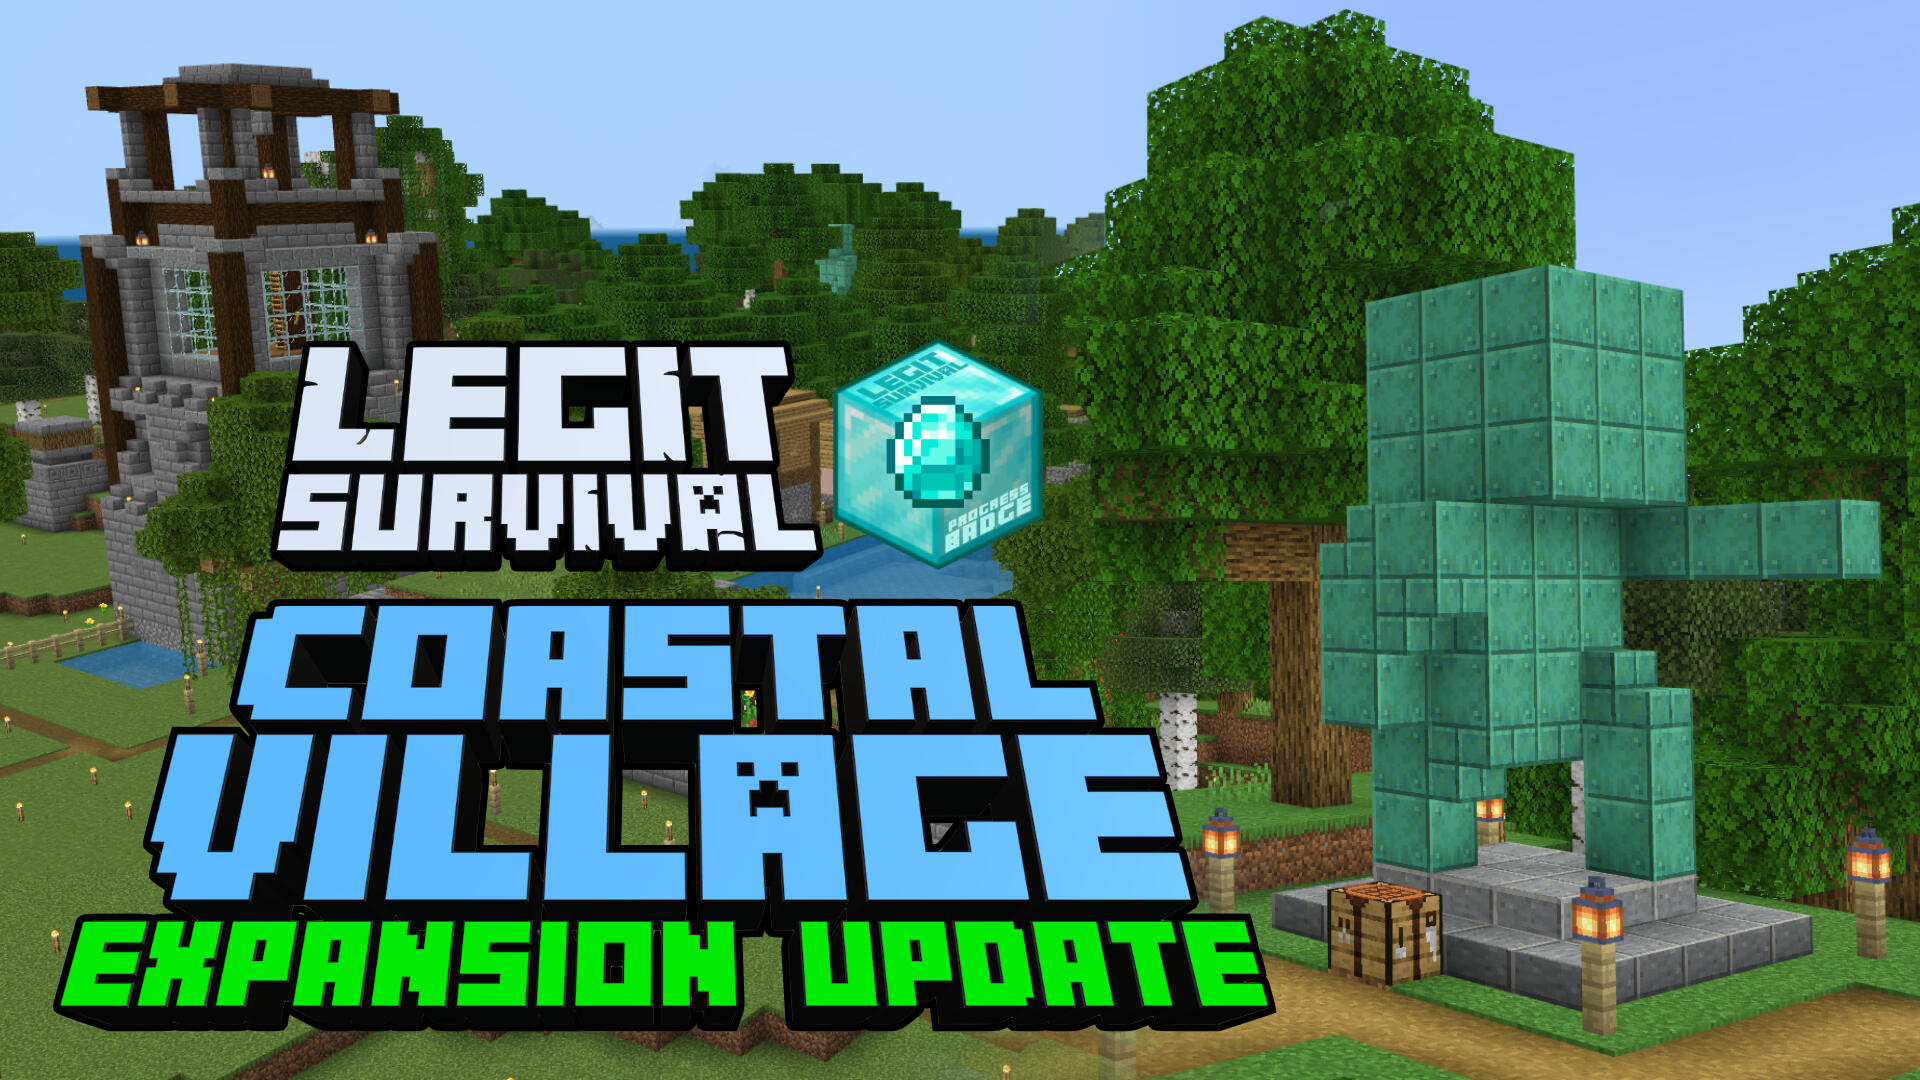 Coastal Village Expansion Update